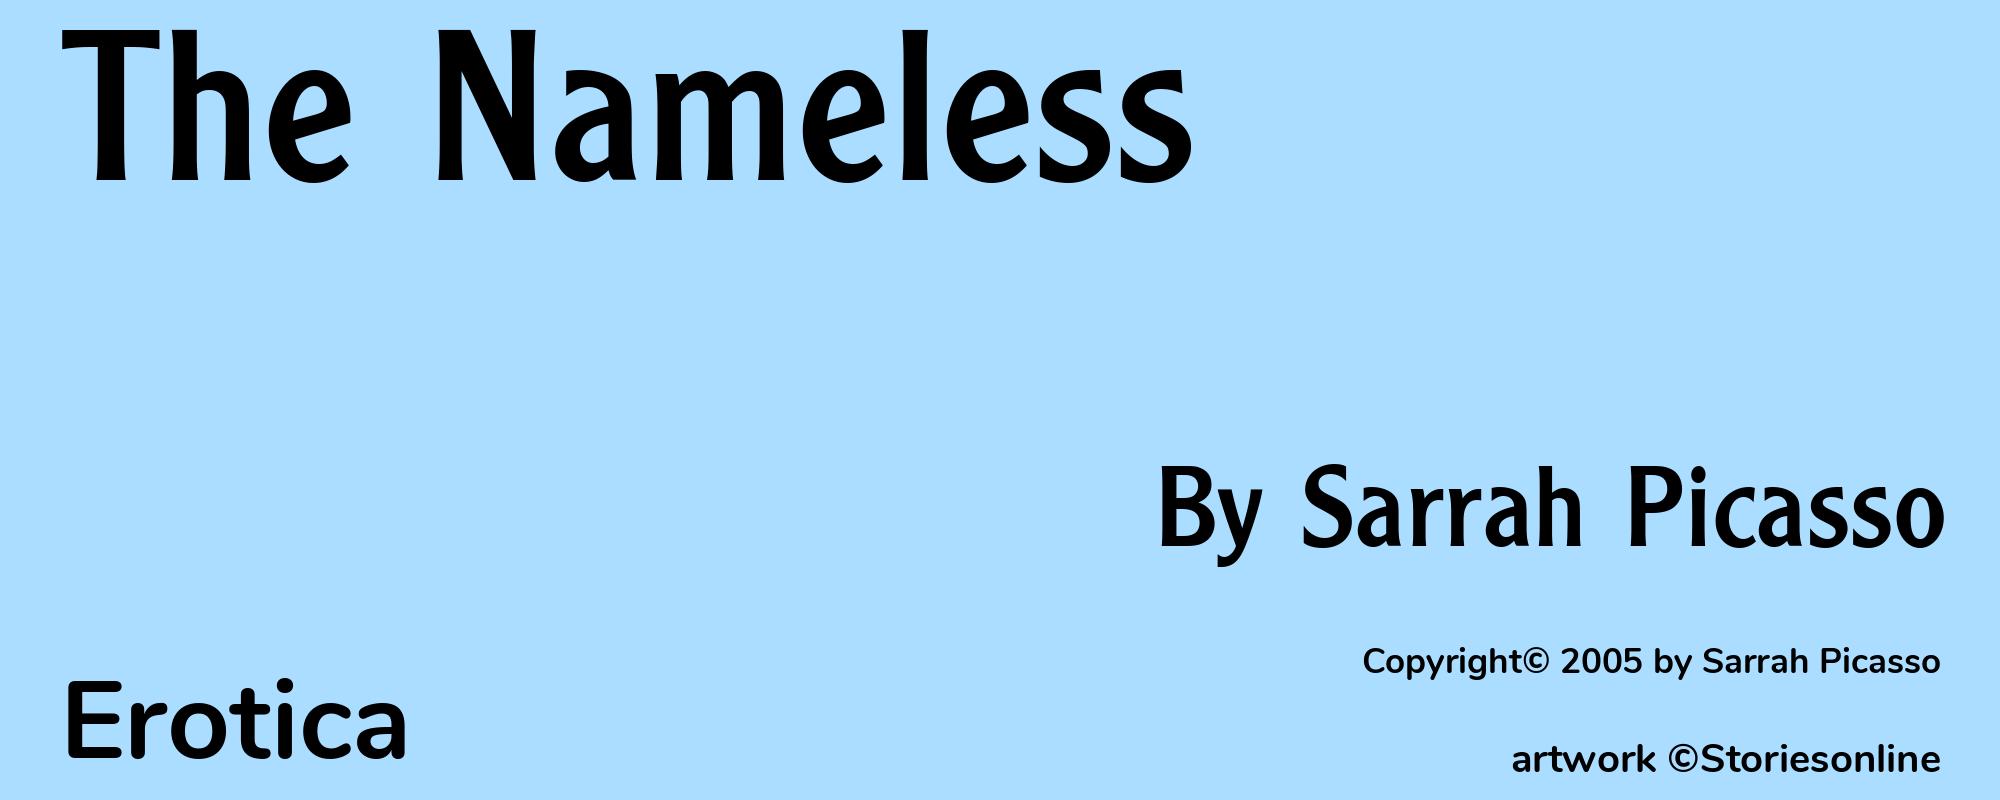 The Nameless - Cover